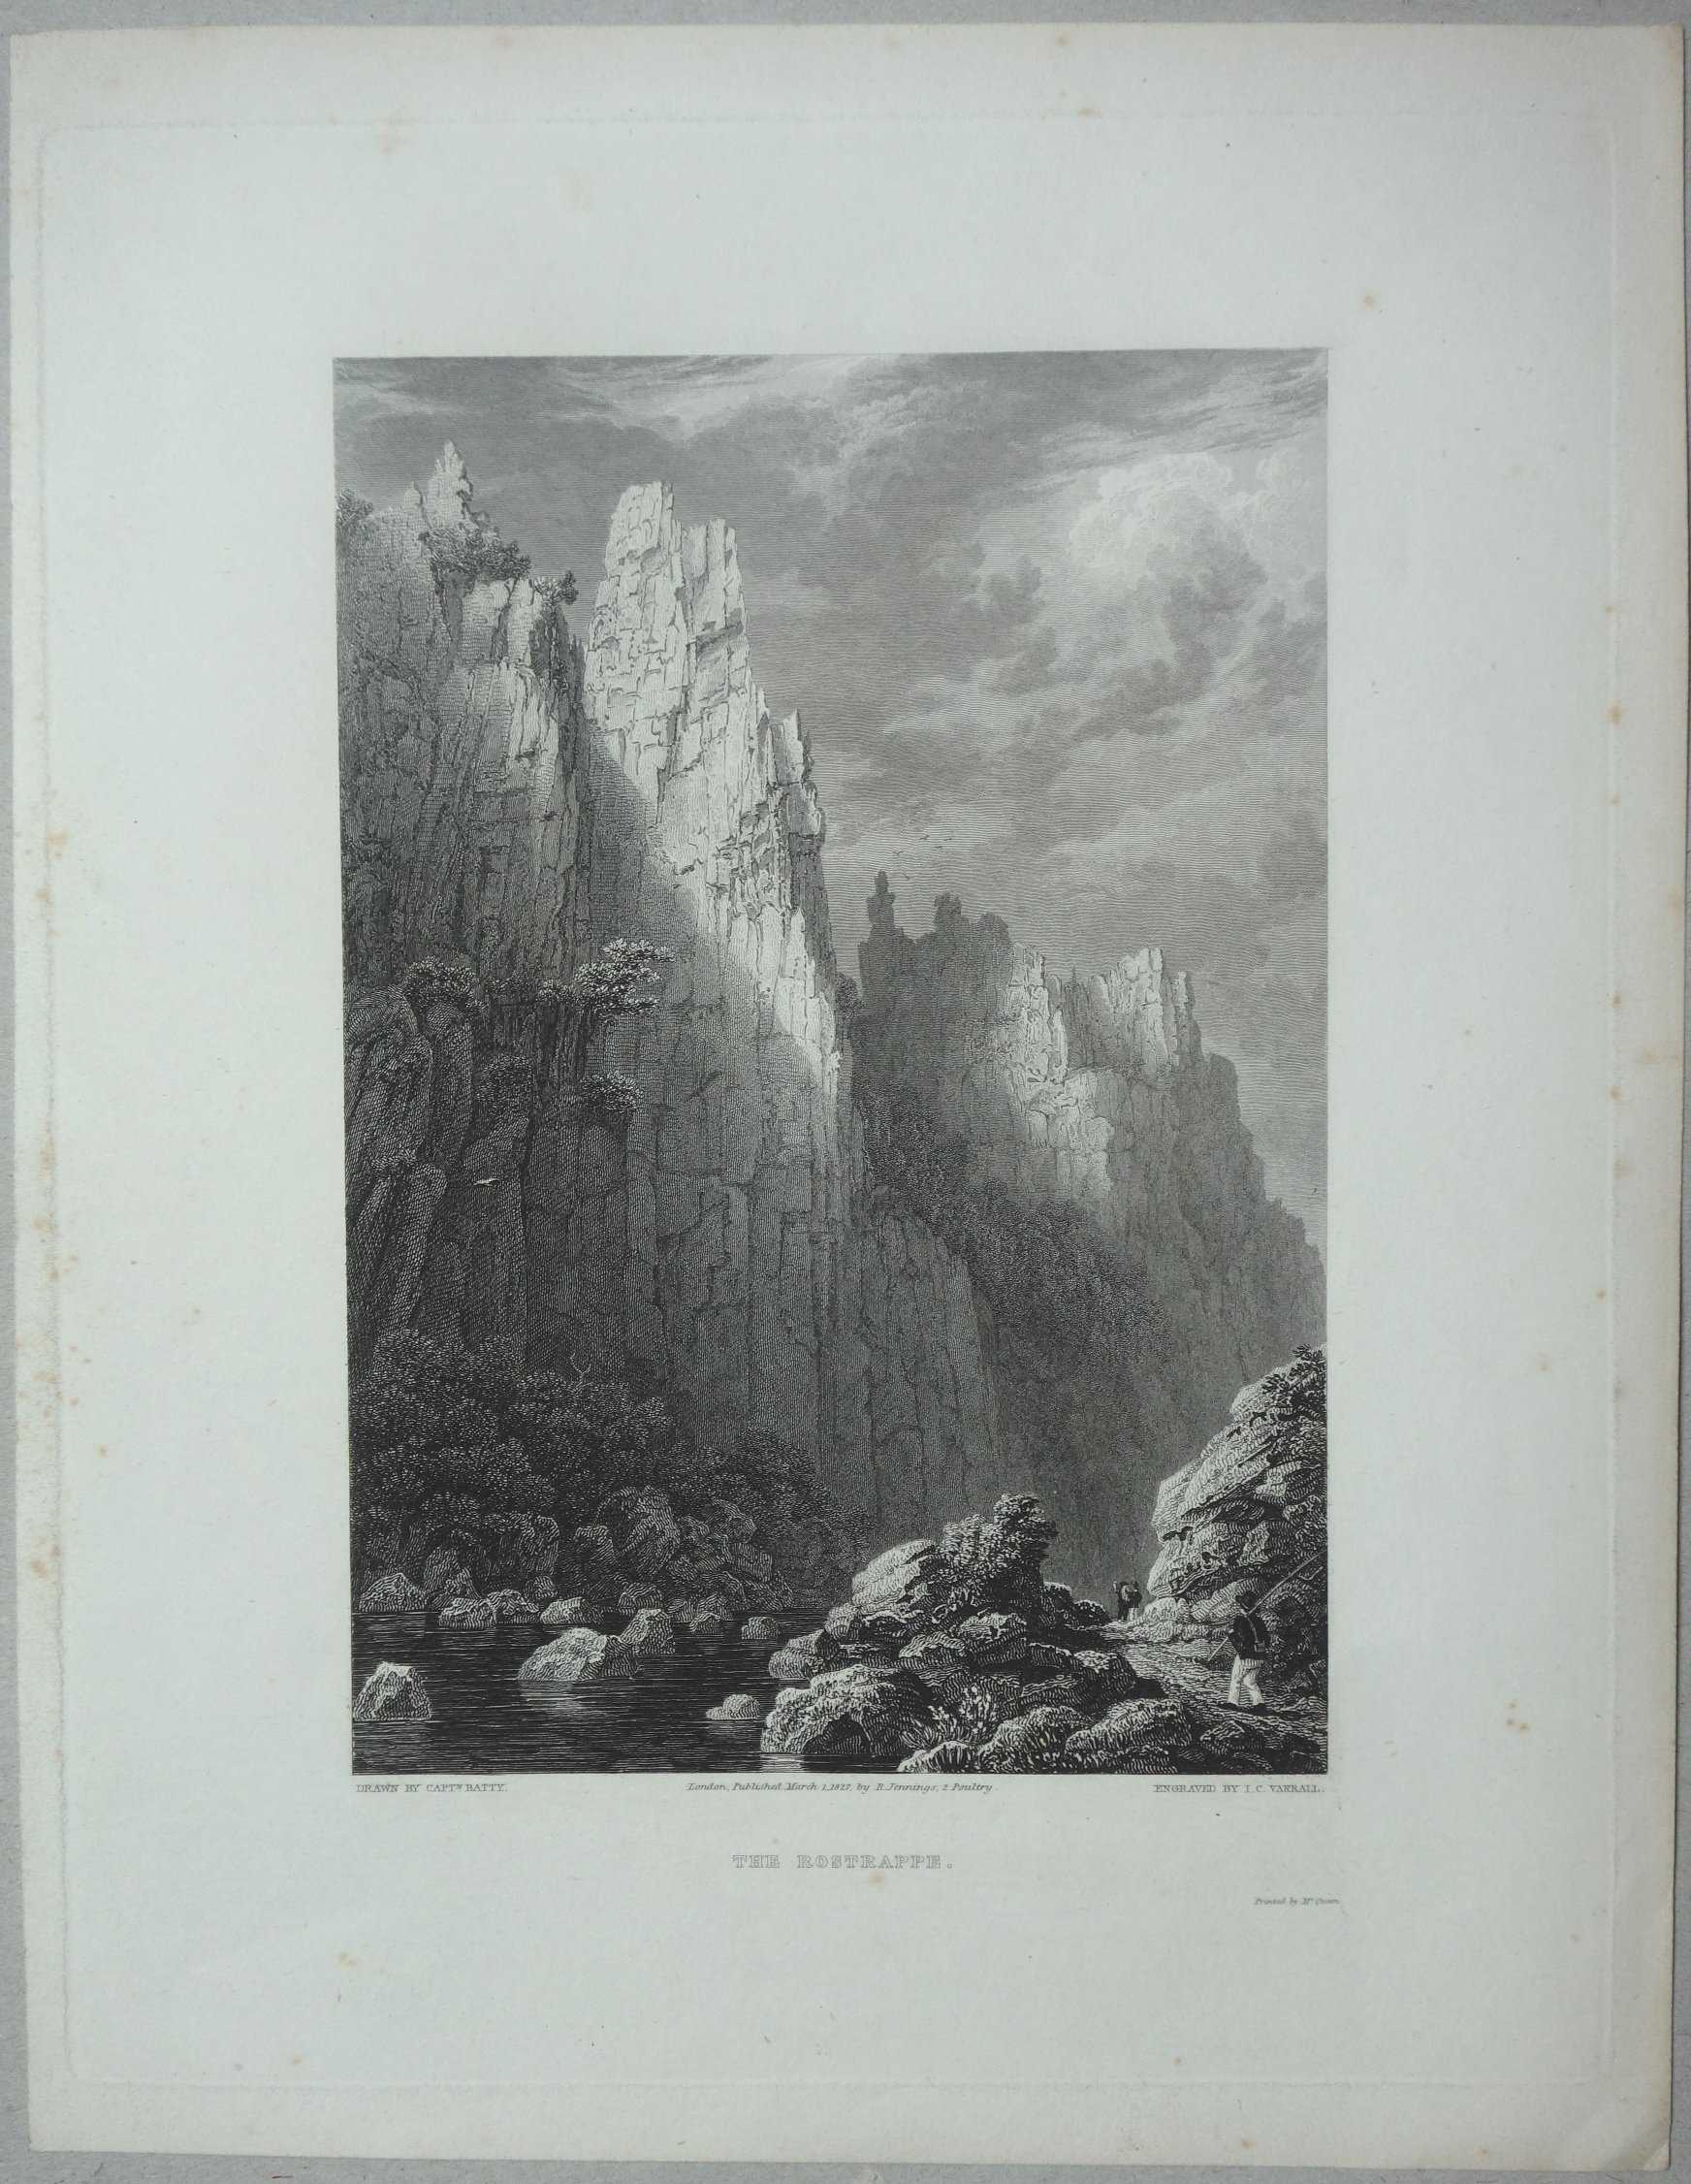 Bodetal: Blick aus dem Tal hinauf zur Roßtrappe, 1827 (aus: Jennings "Scenery") (Schloß Wernigerode GmbH RR-F)